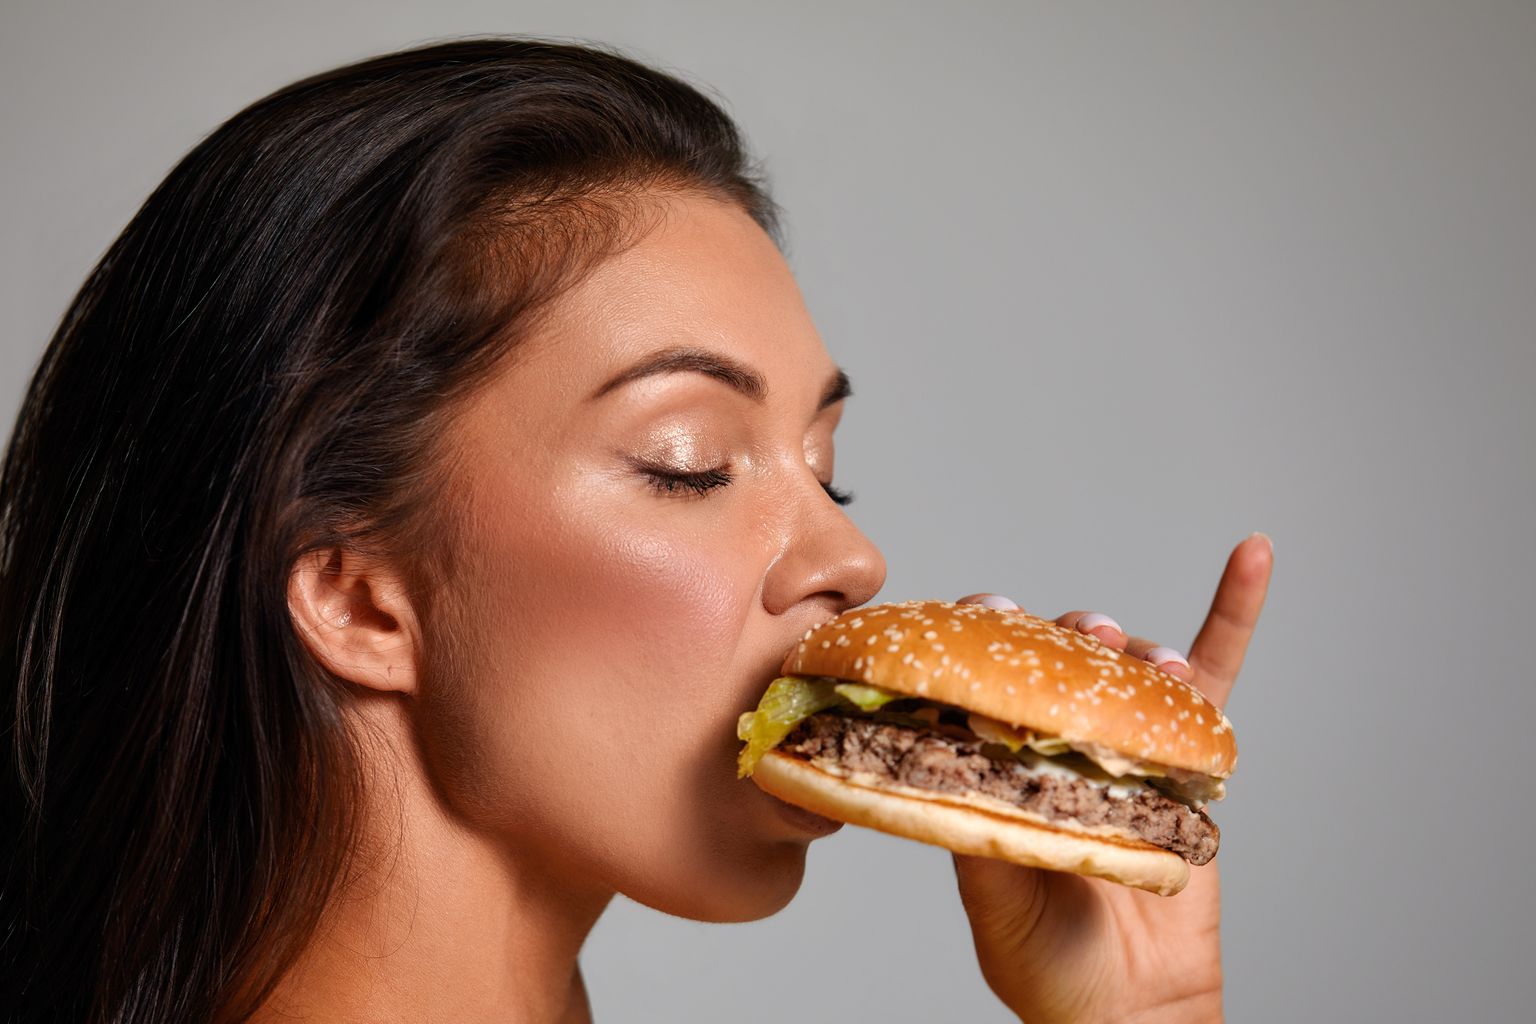 Девушка ест гамбургер. Иллюстративное фото